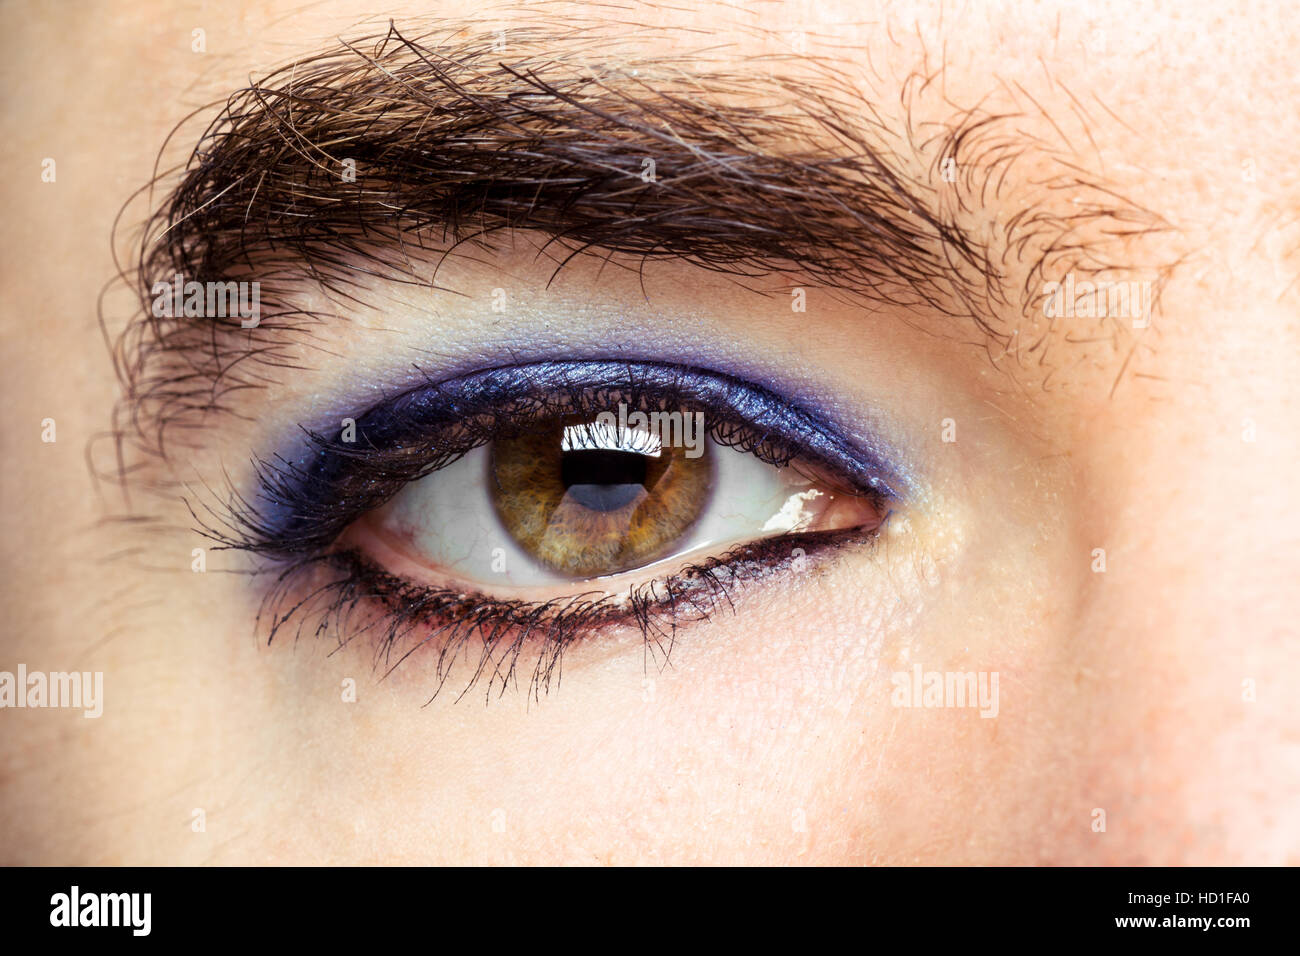 Transgender Man's Eye with Make Up Stock Photo